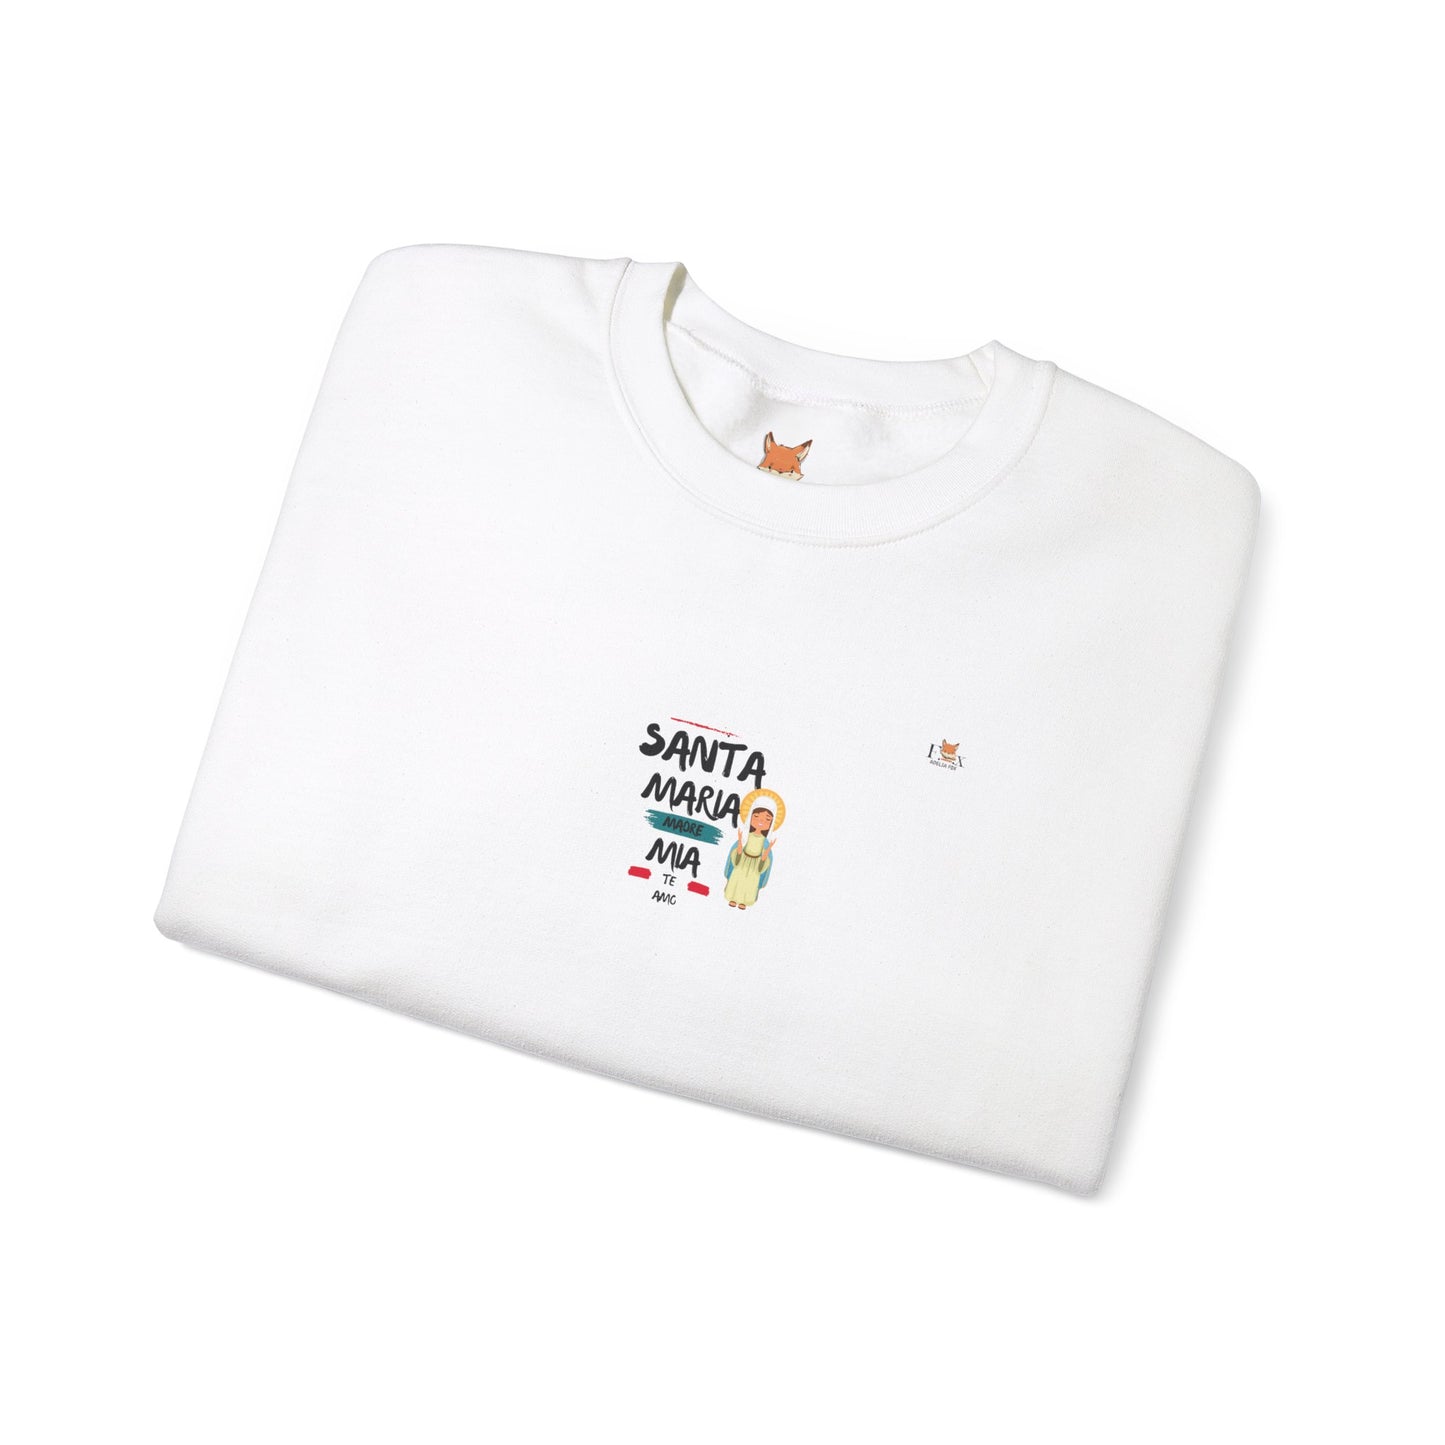 Santa Maria Te Amo [Spanish]- Unisex Crewneck Sweatshirt